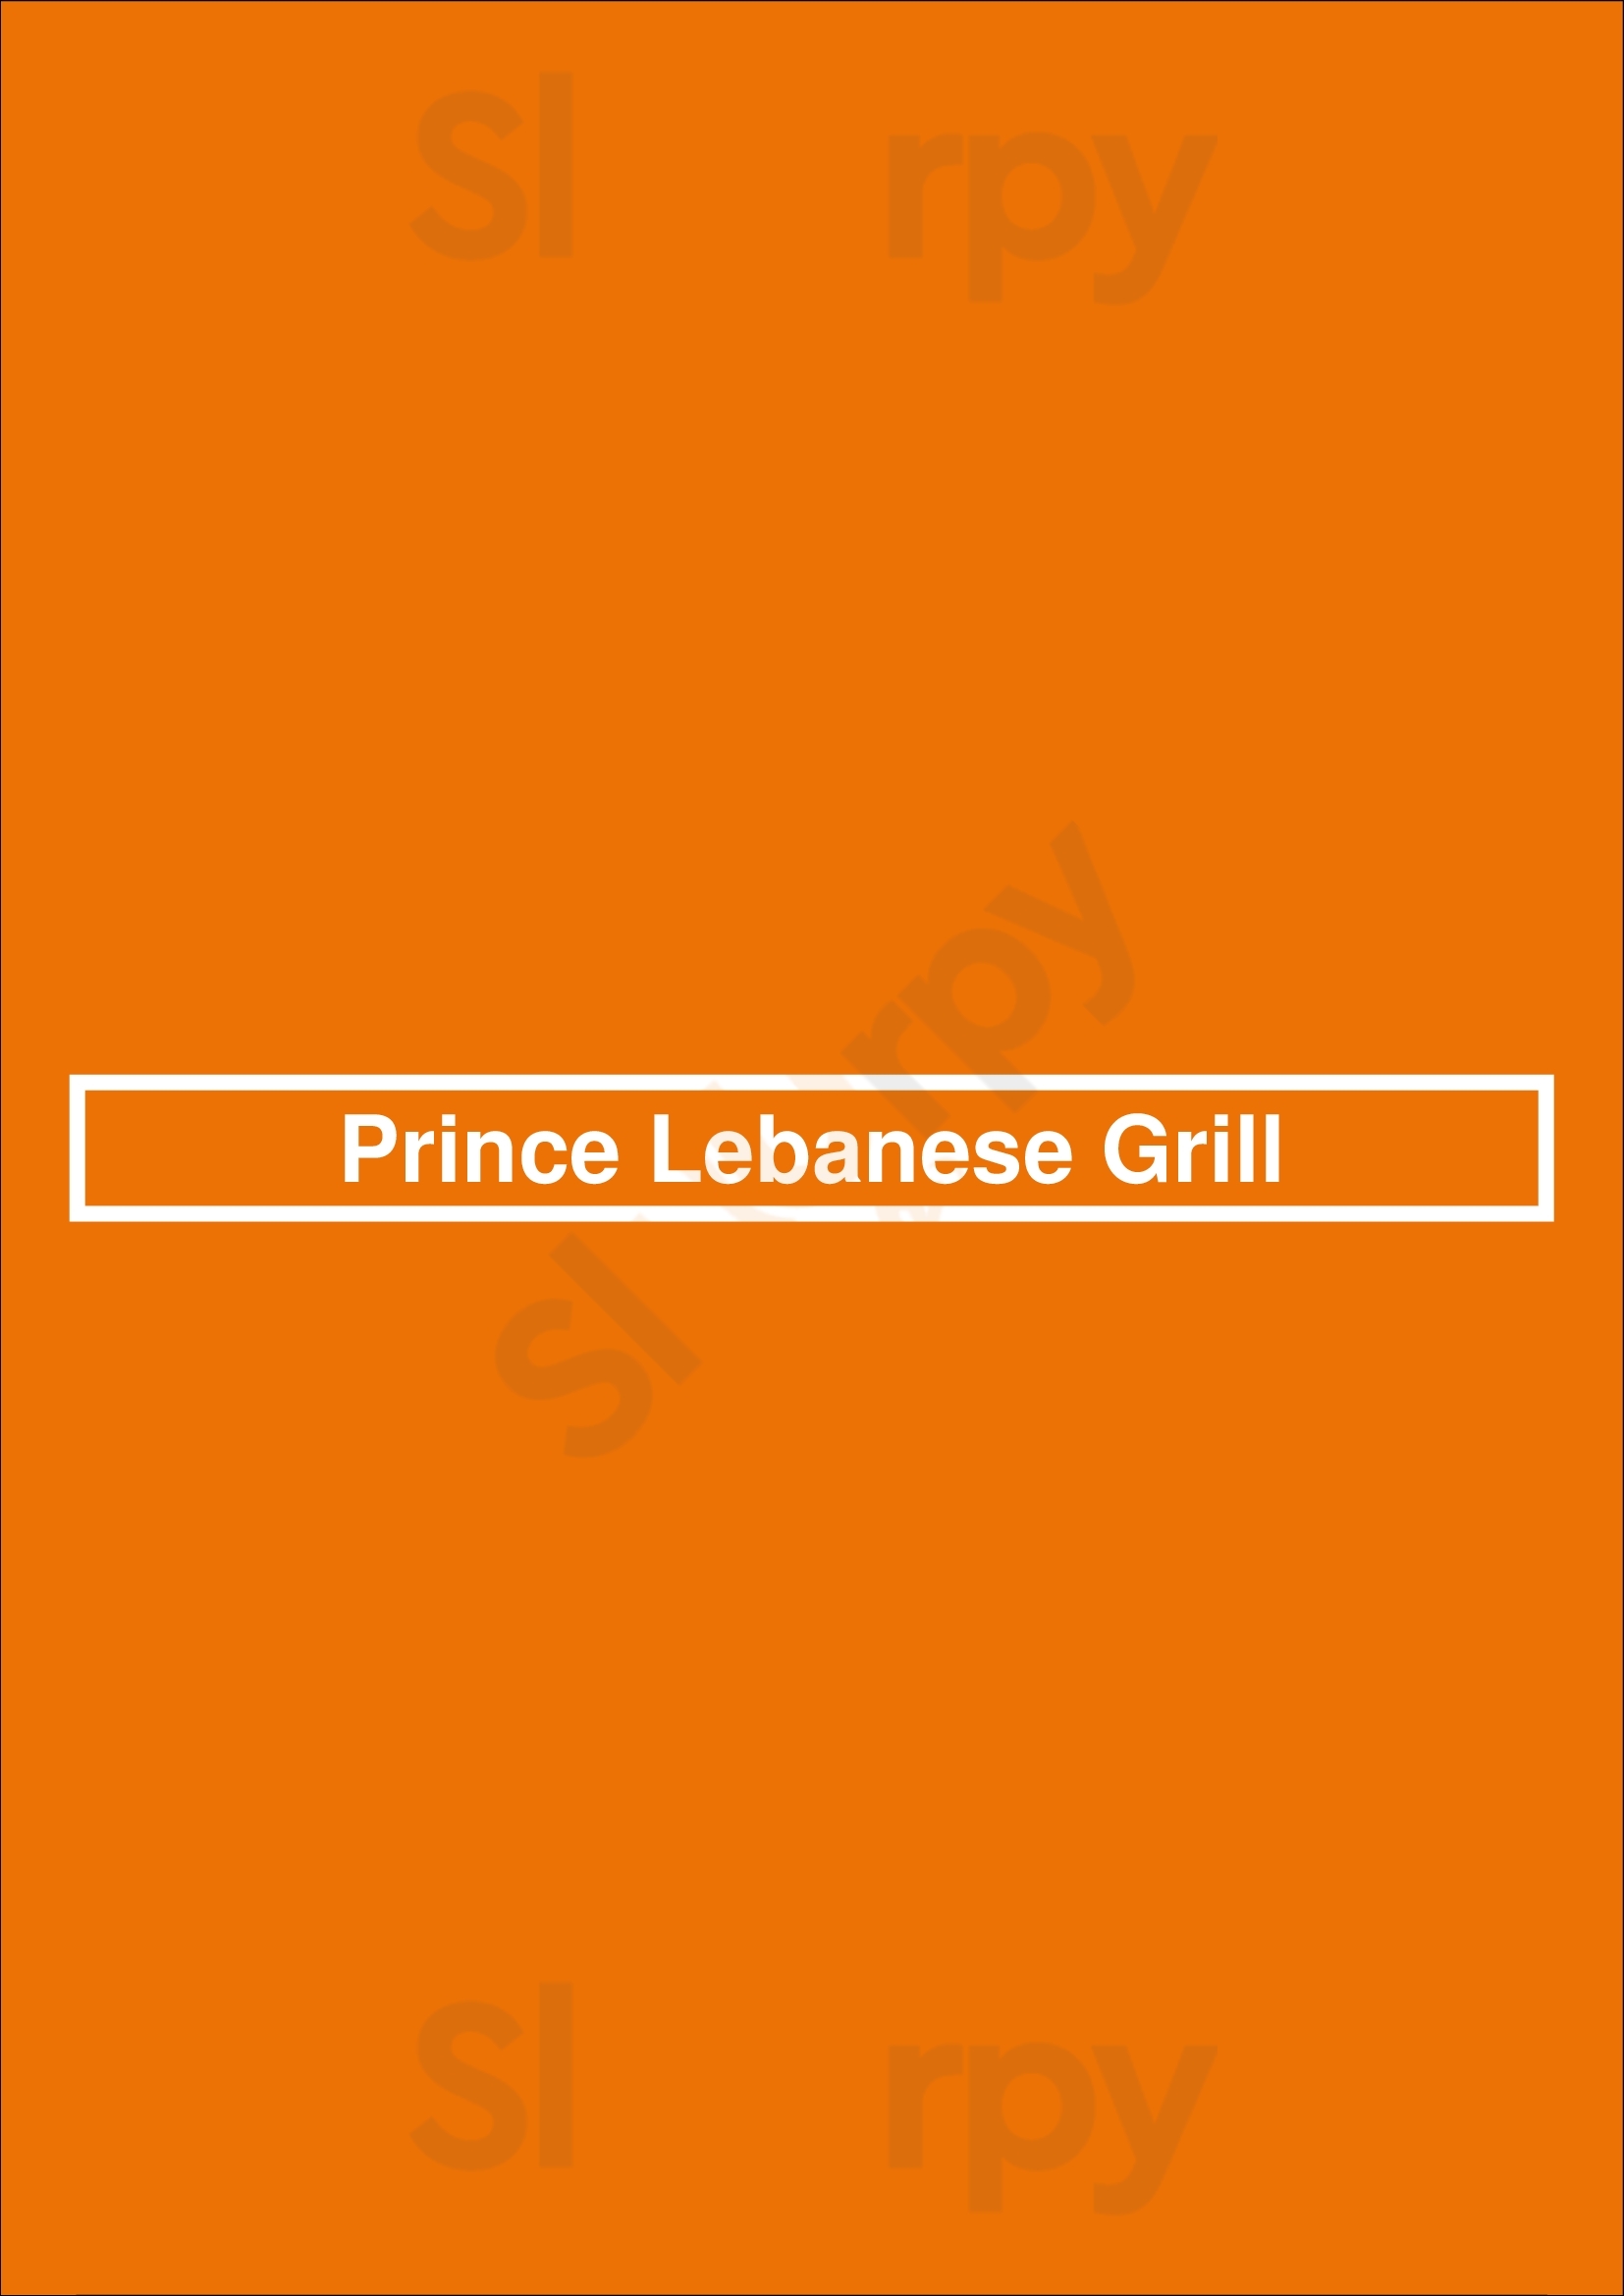 Prince Lebanese Grill Arlington Menu - 1